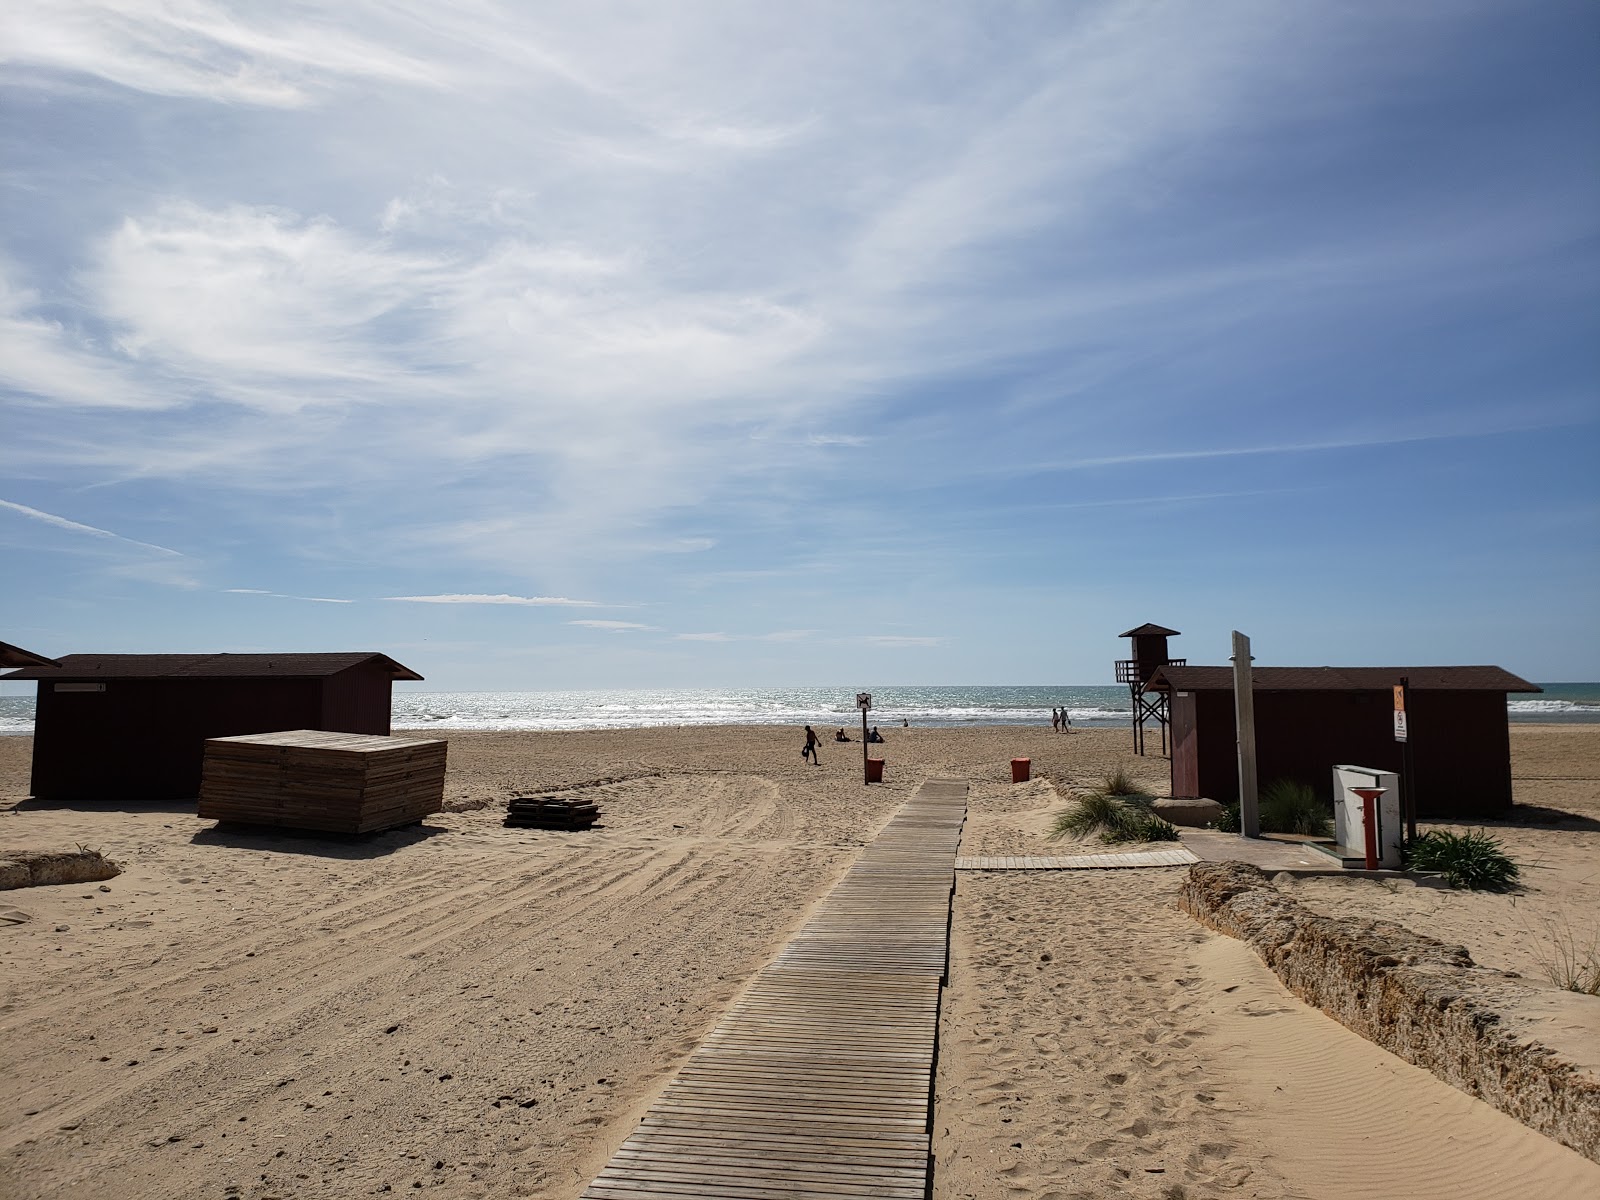 Foto di Playa el Chato con una superficie del sabbia luminosa